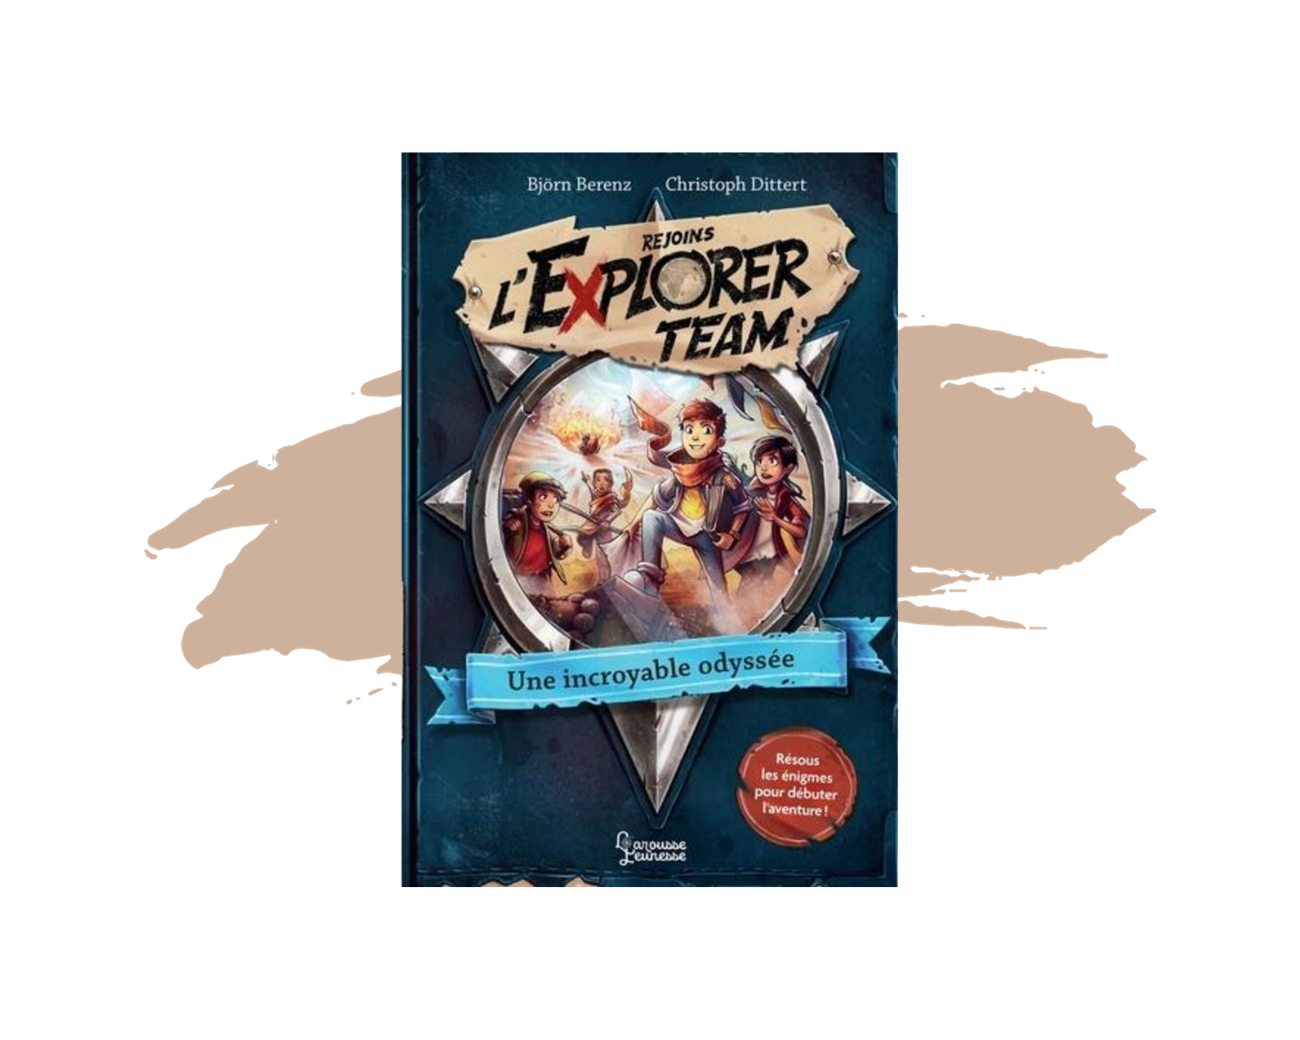 Le livre-jeu "Rejoins l'Explorer Team" de Björn Berenz.